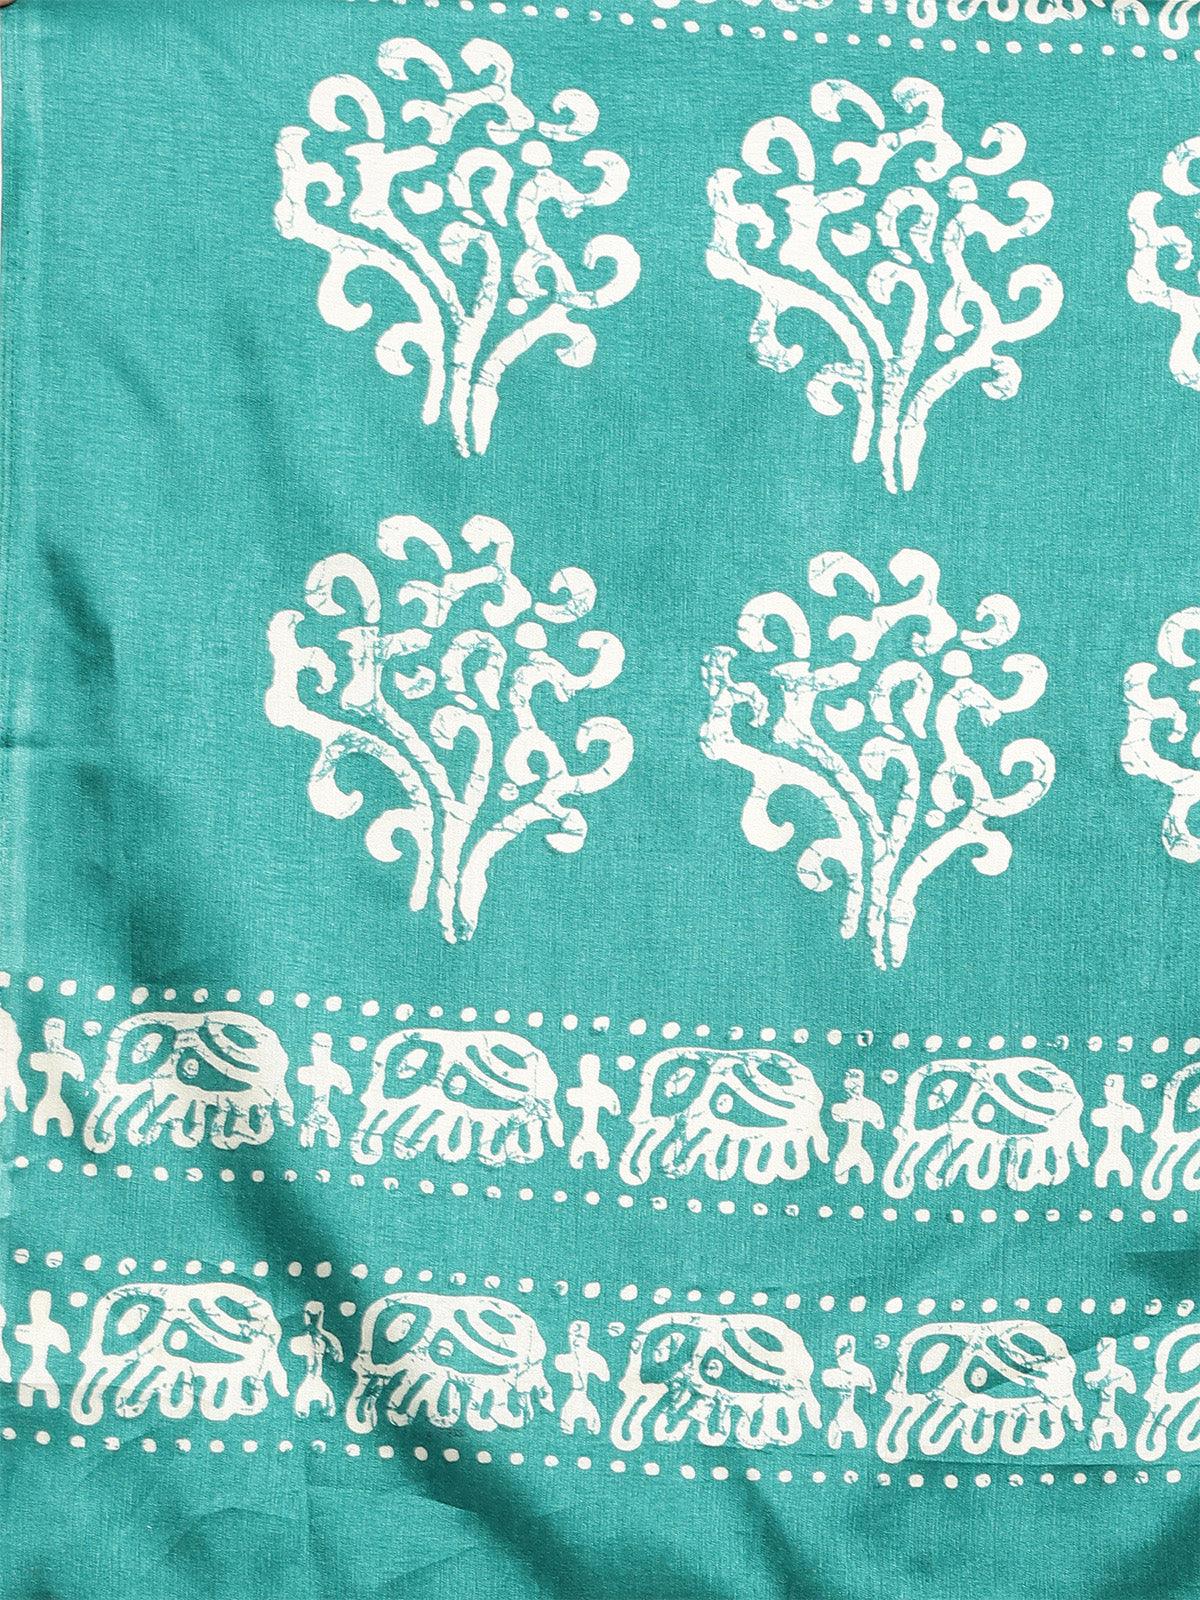 Women's Manipuri Silk Navy Blue Printed Saree With Blouse Piece - Odette